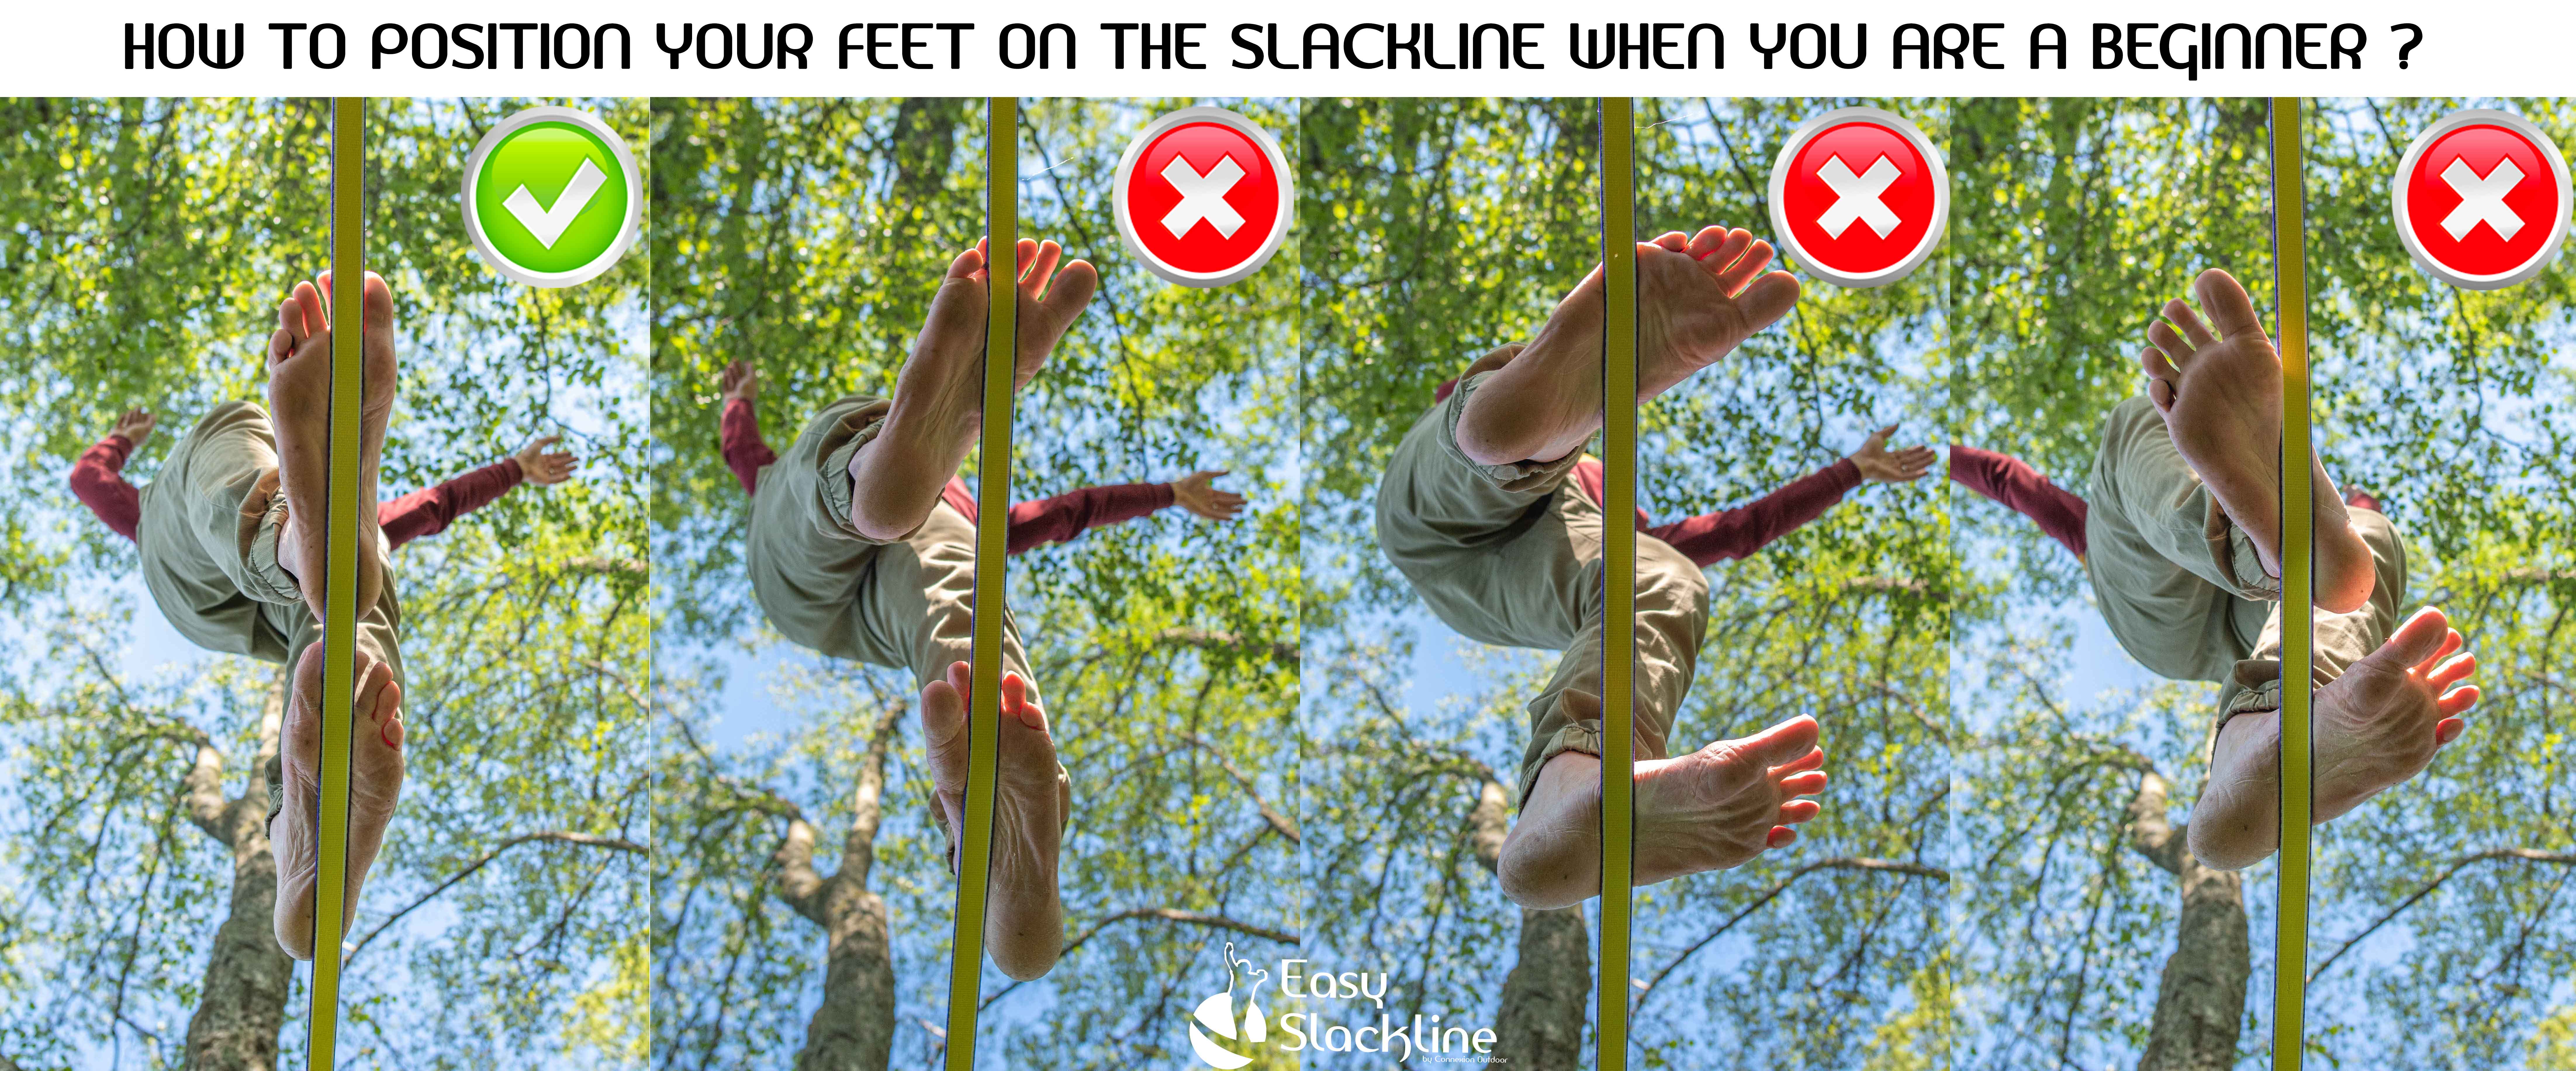 Position feet on slackline